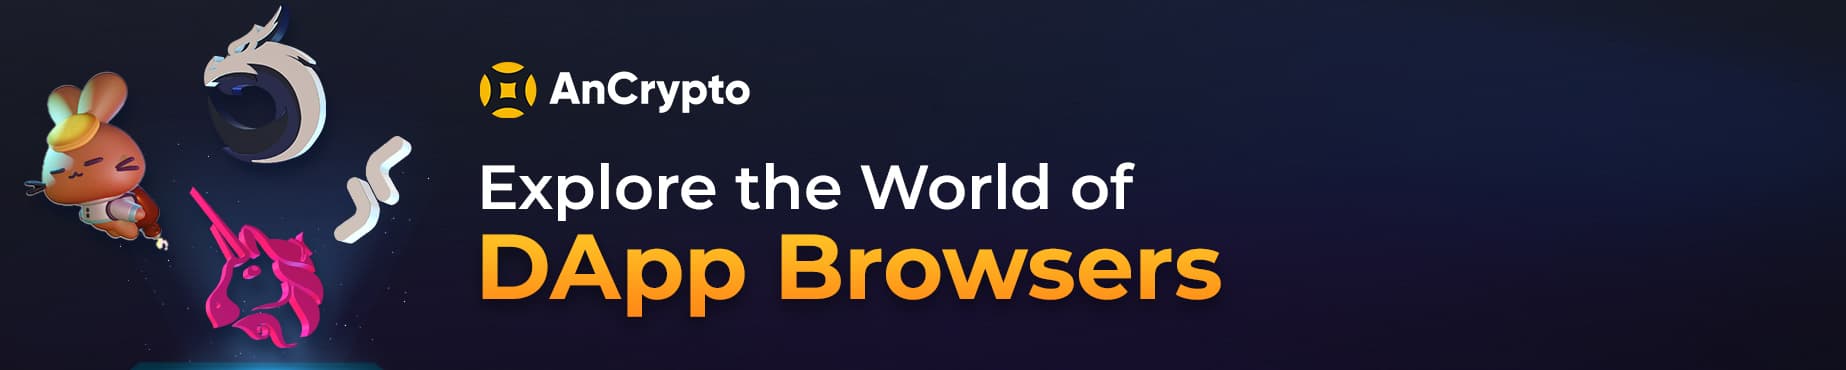 explore the world of DAPPS Browser cta button